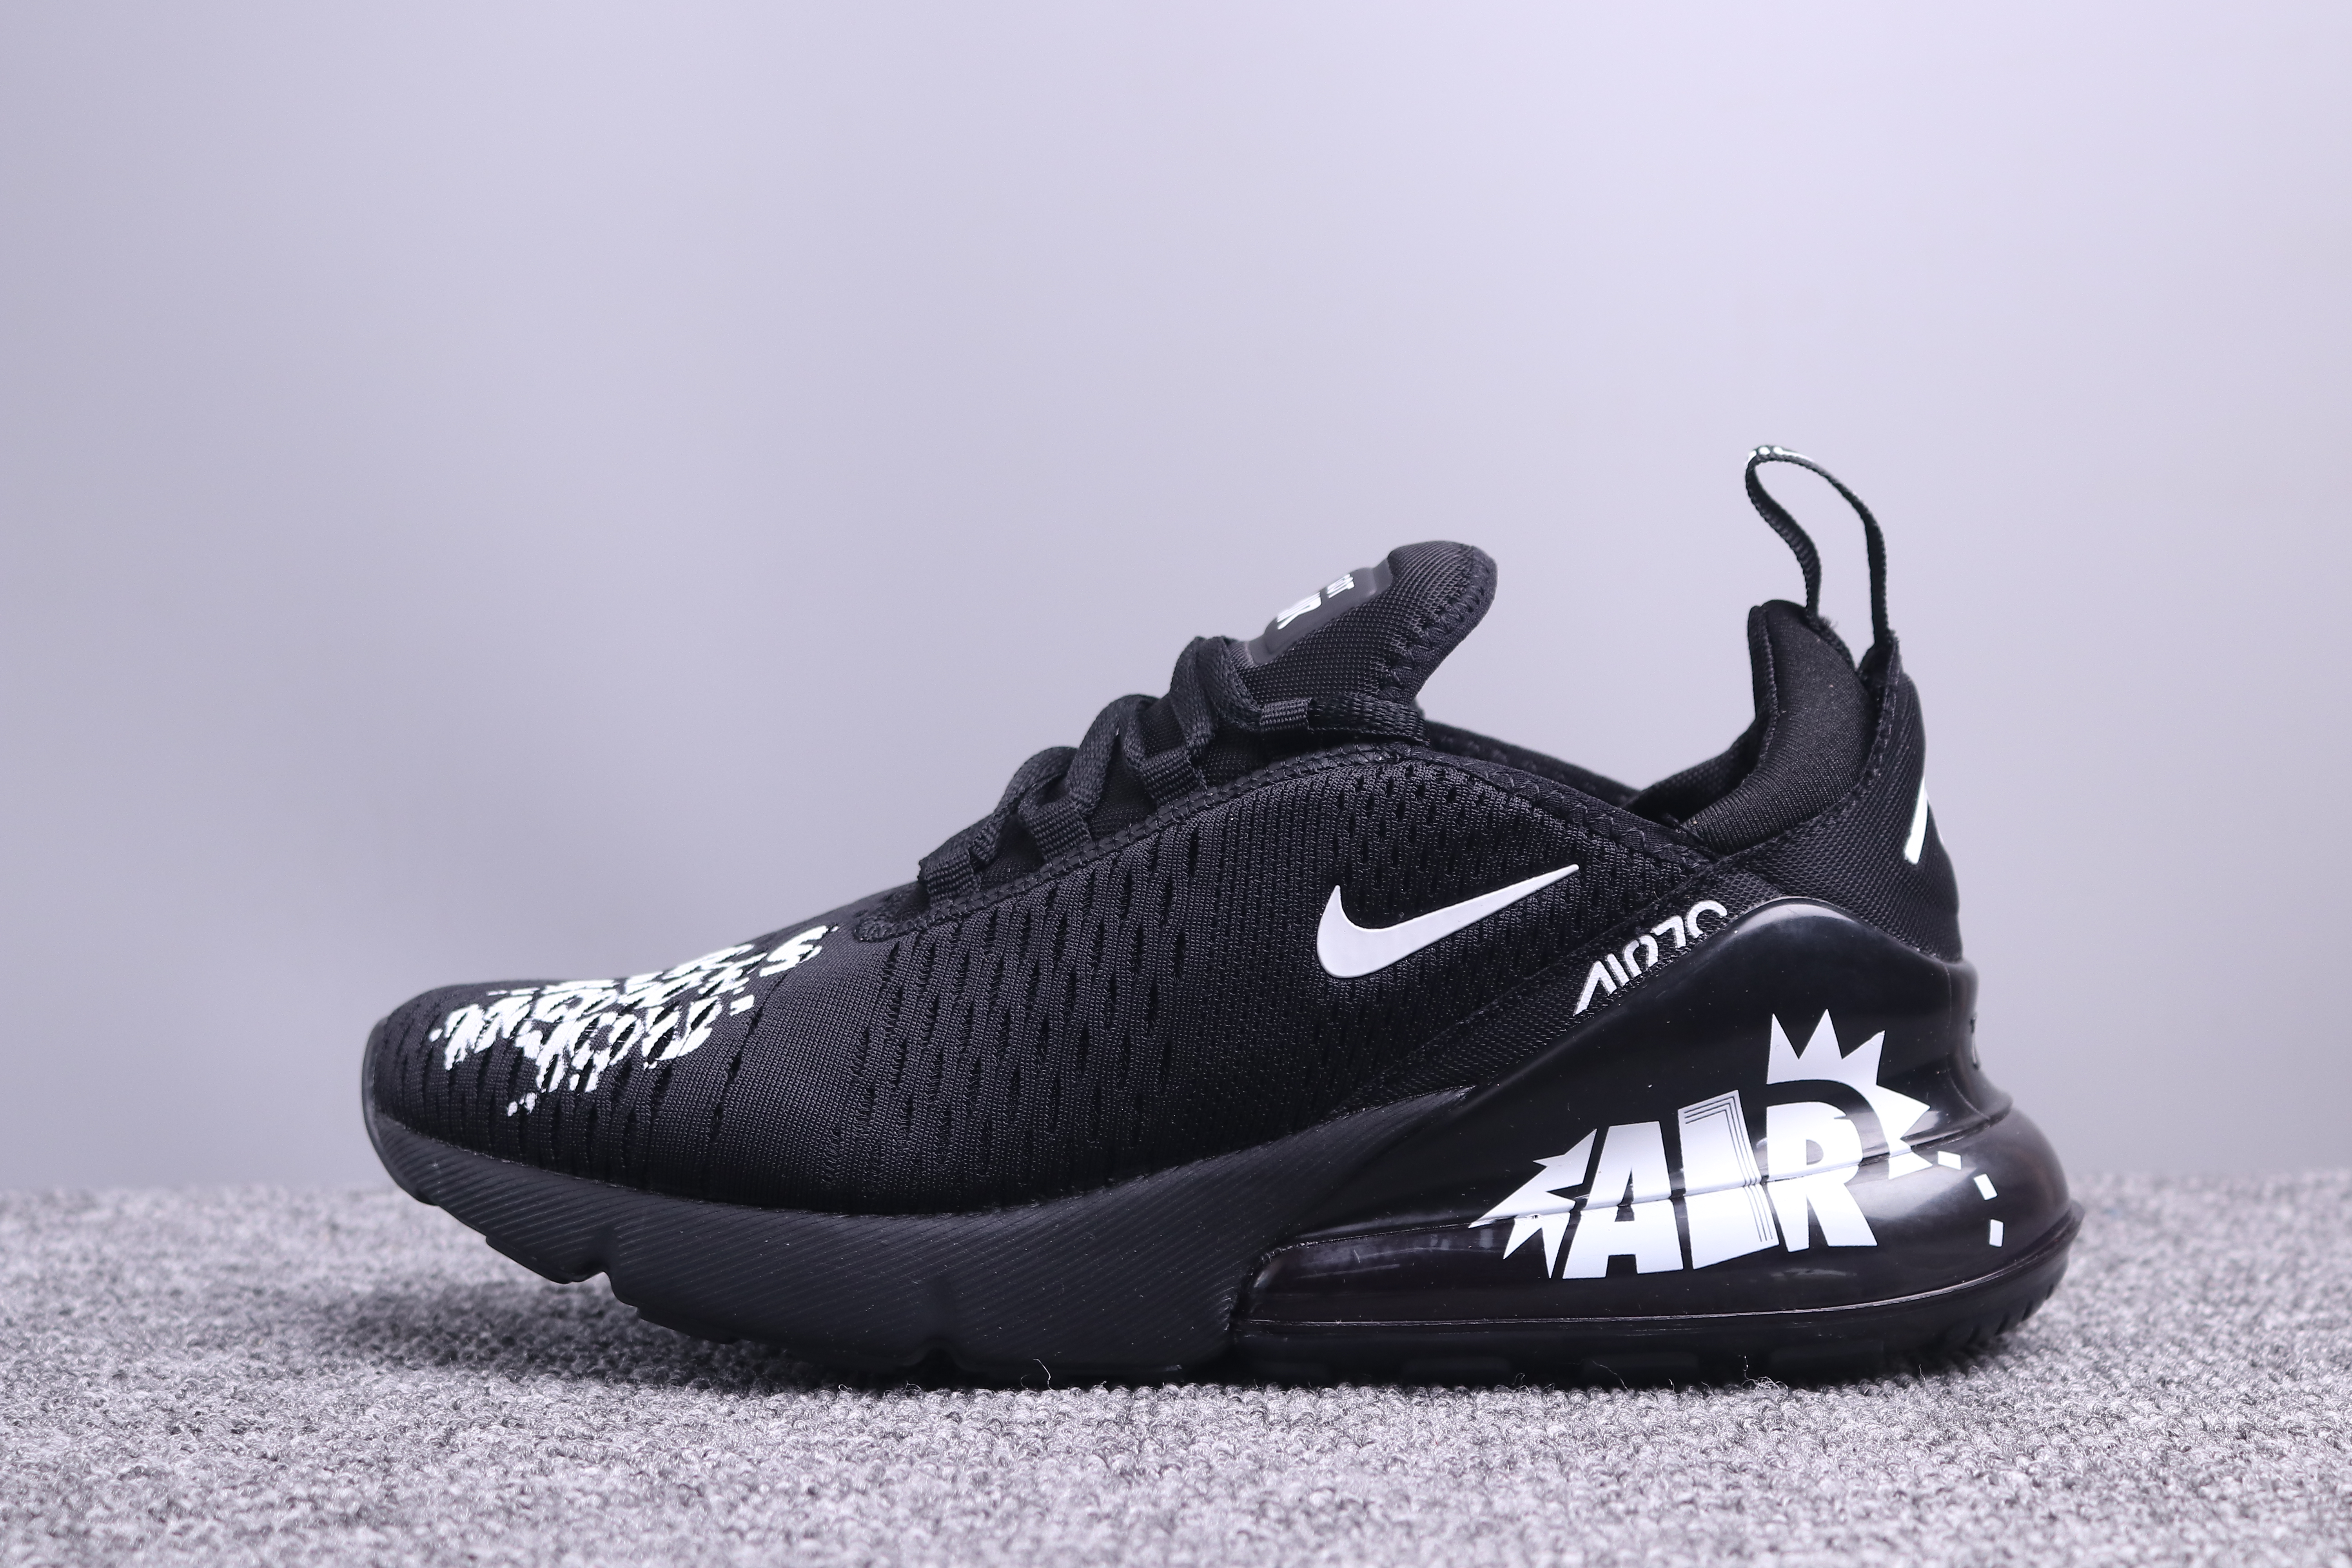 Nike Air Max 270 Graffiti Black White Shoes